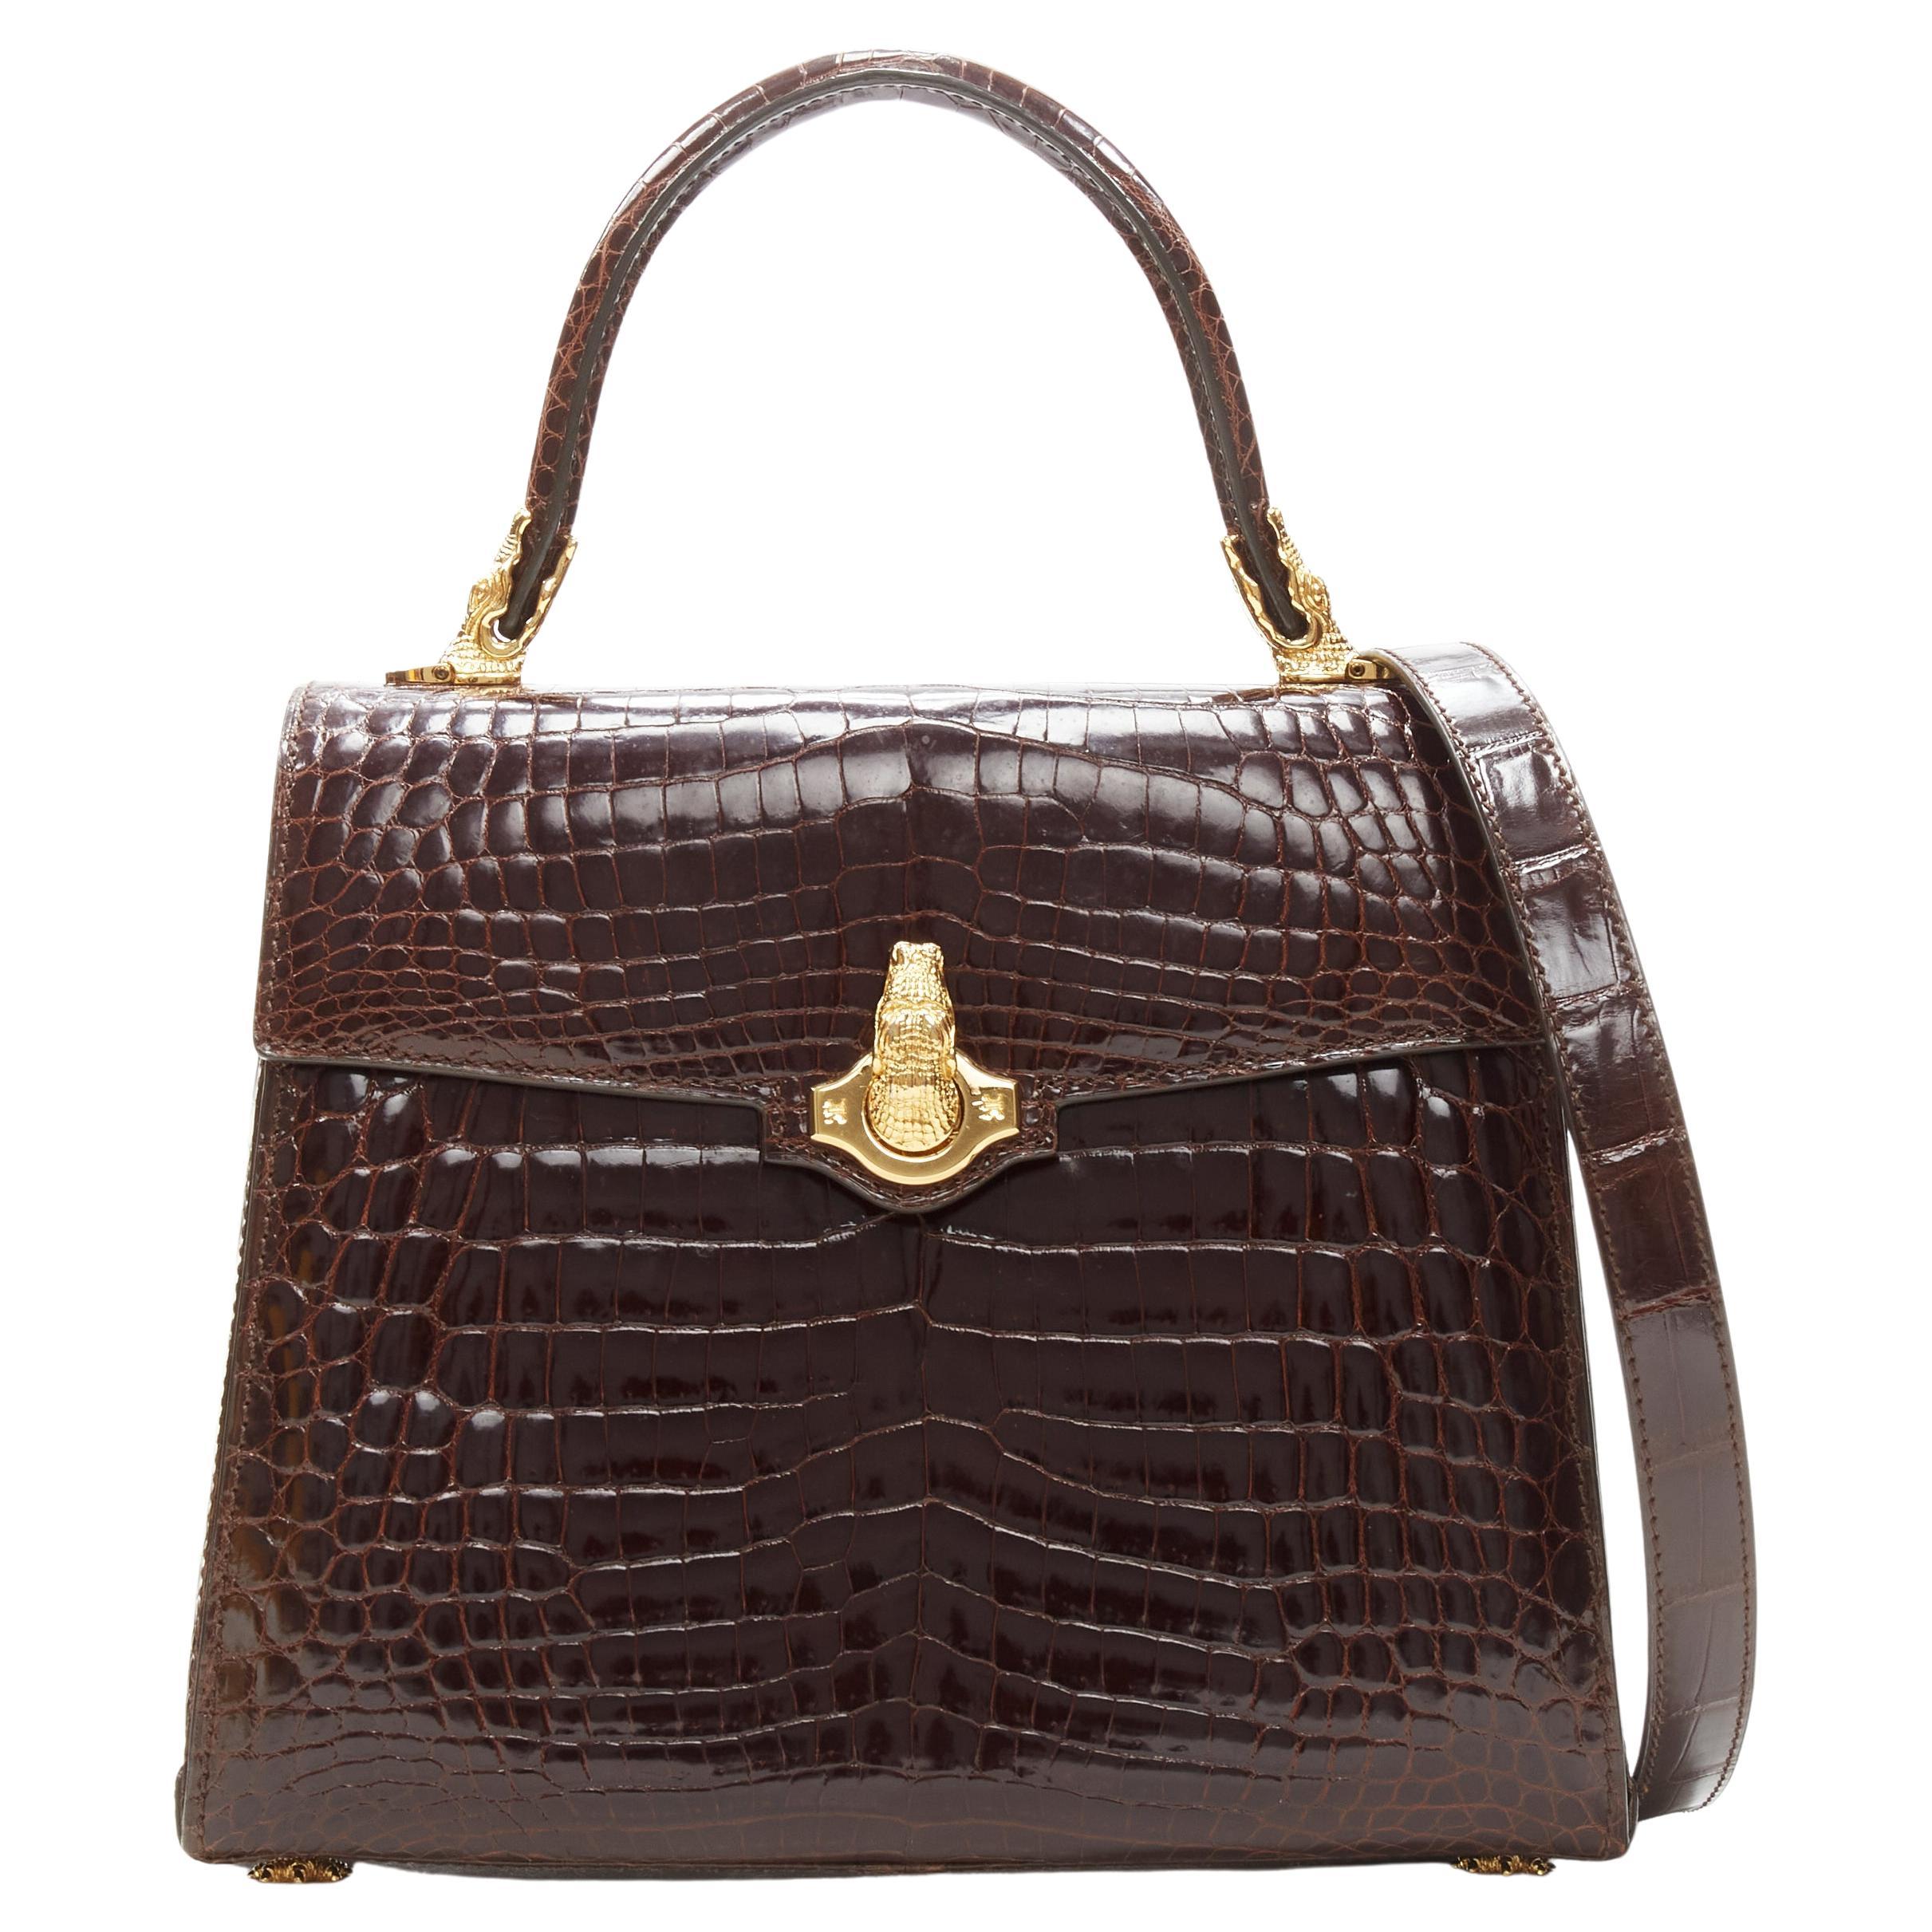 KWANPEN brown polished leather gold croc hardware buckle crossbody satchel bag